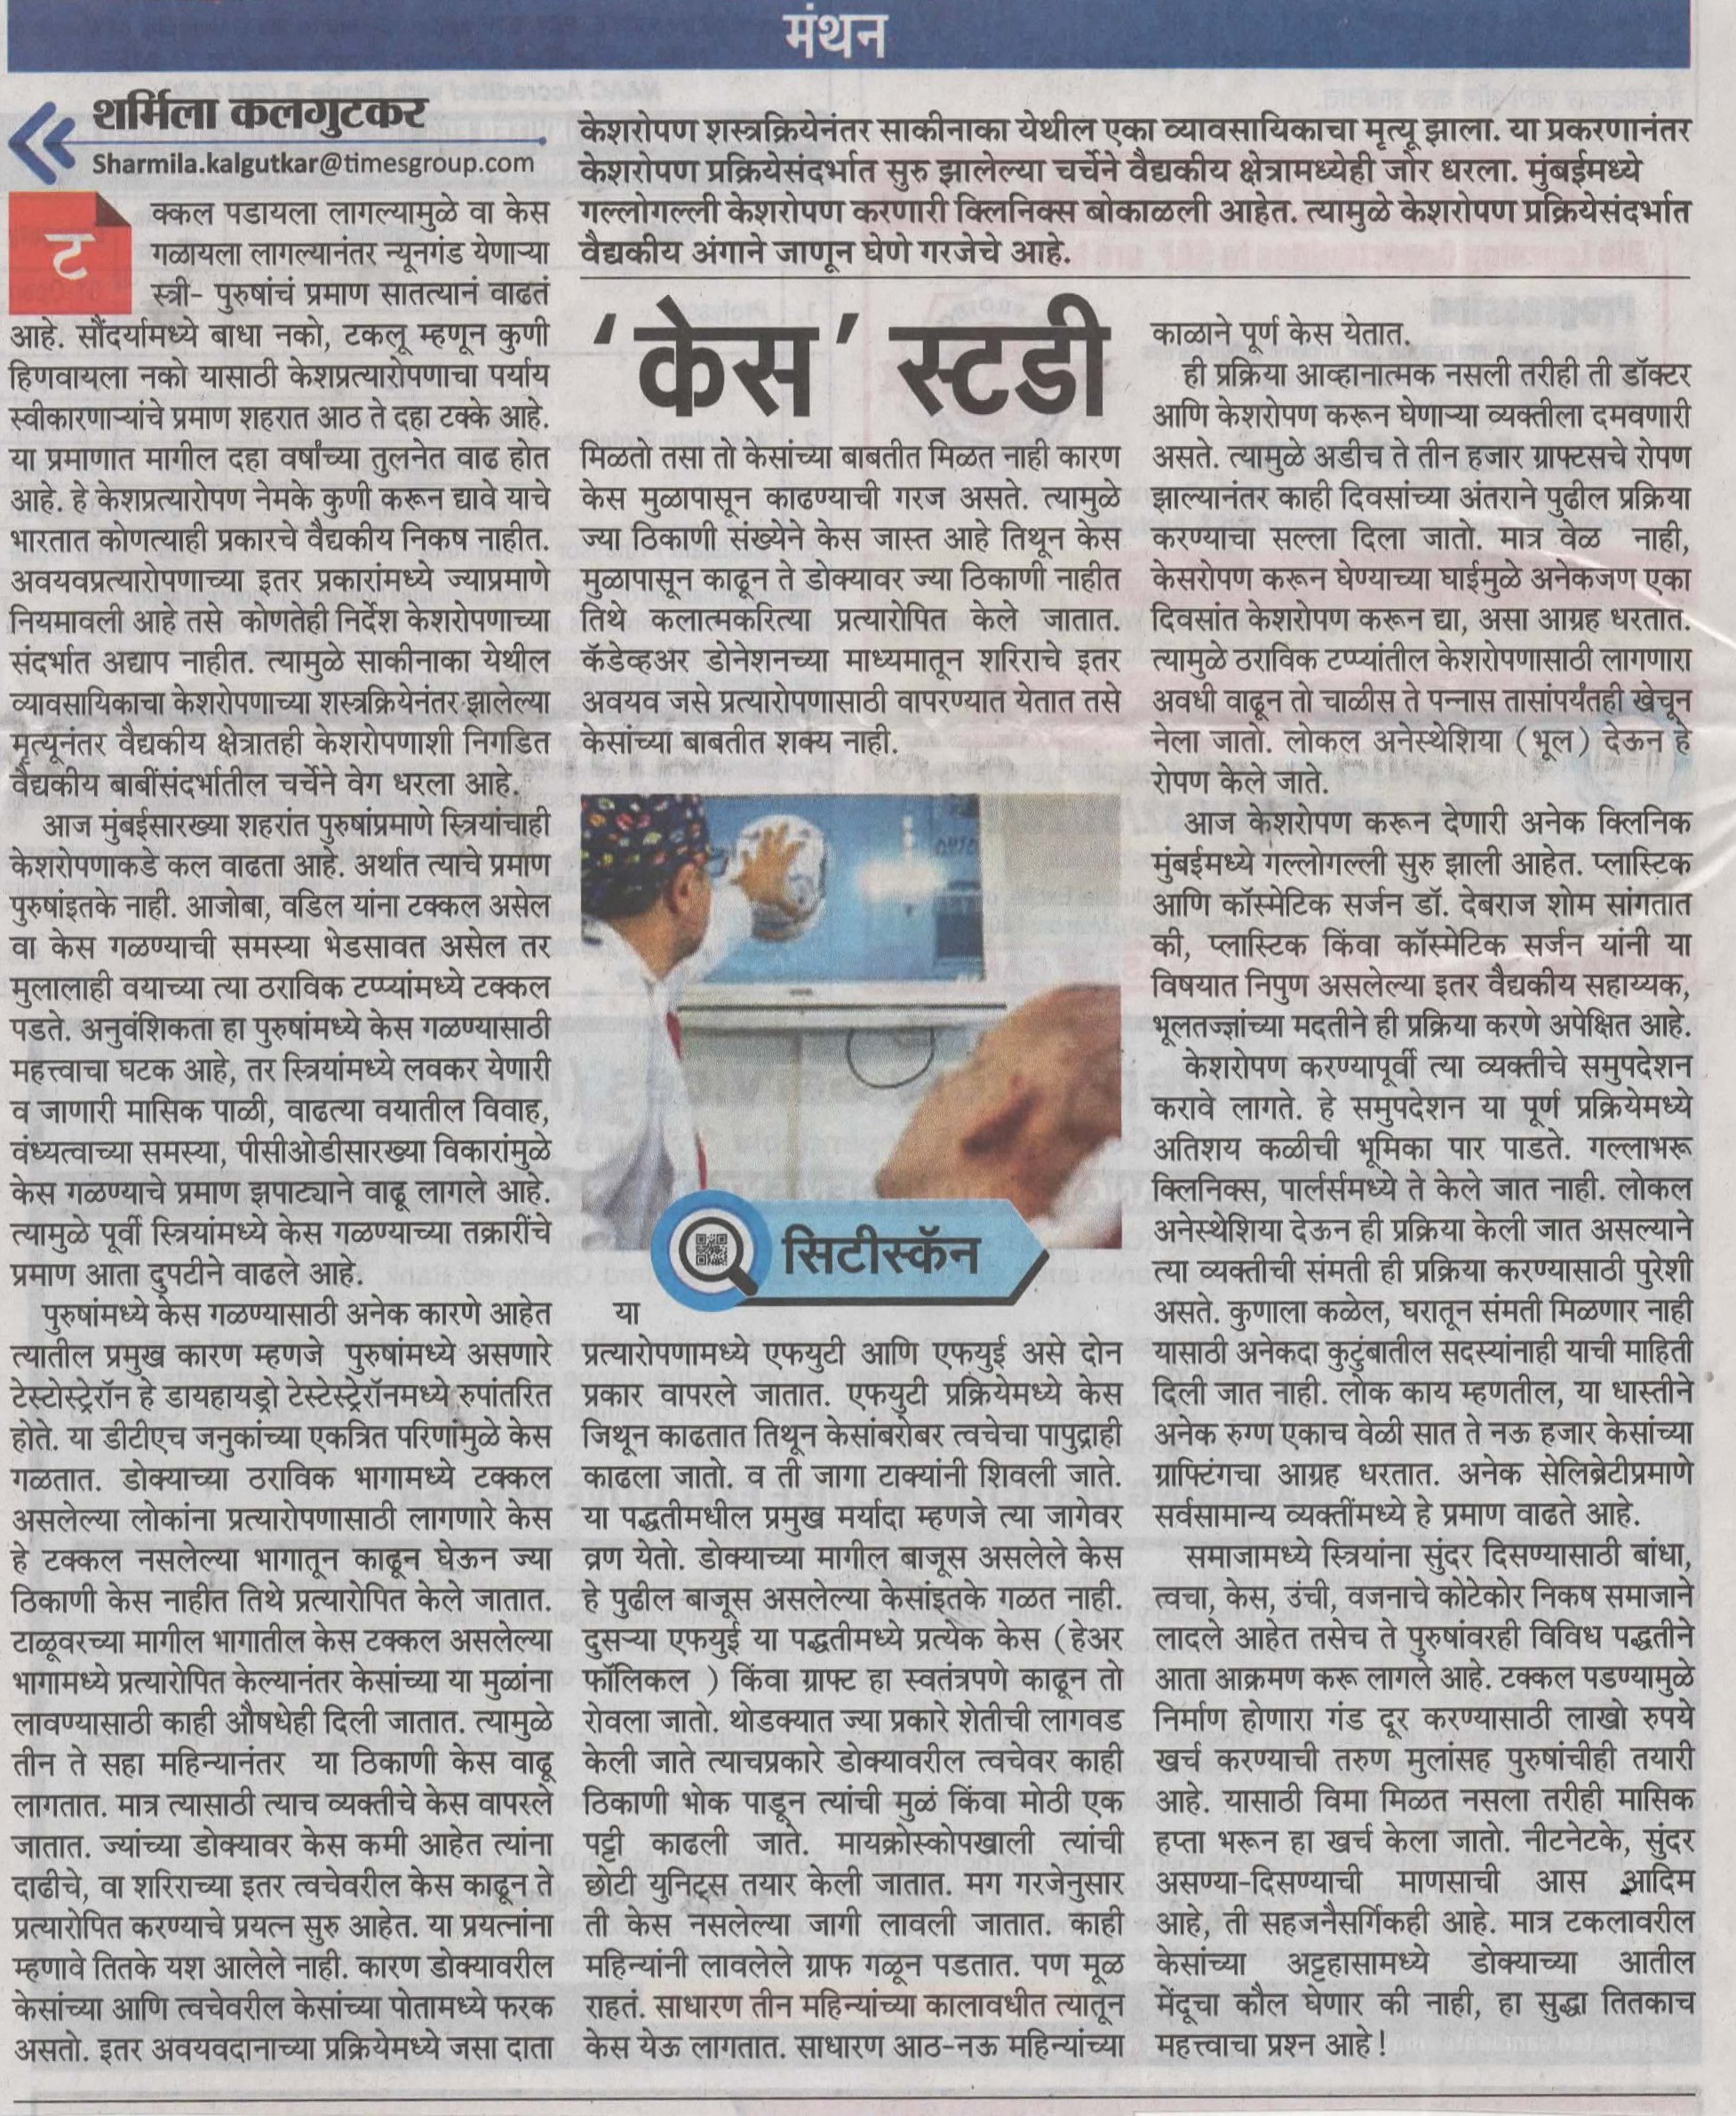 'Hair' Study - Maharashtra Times